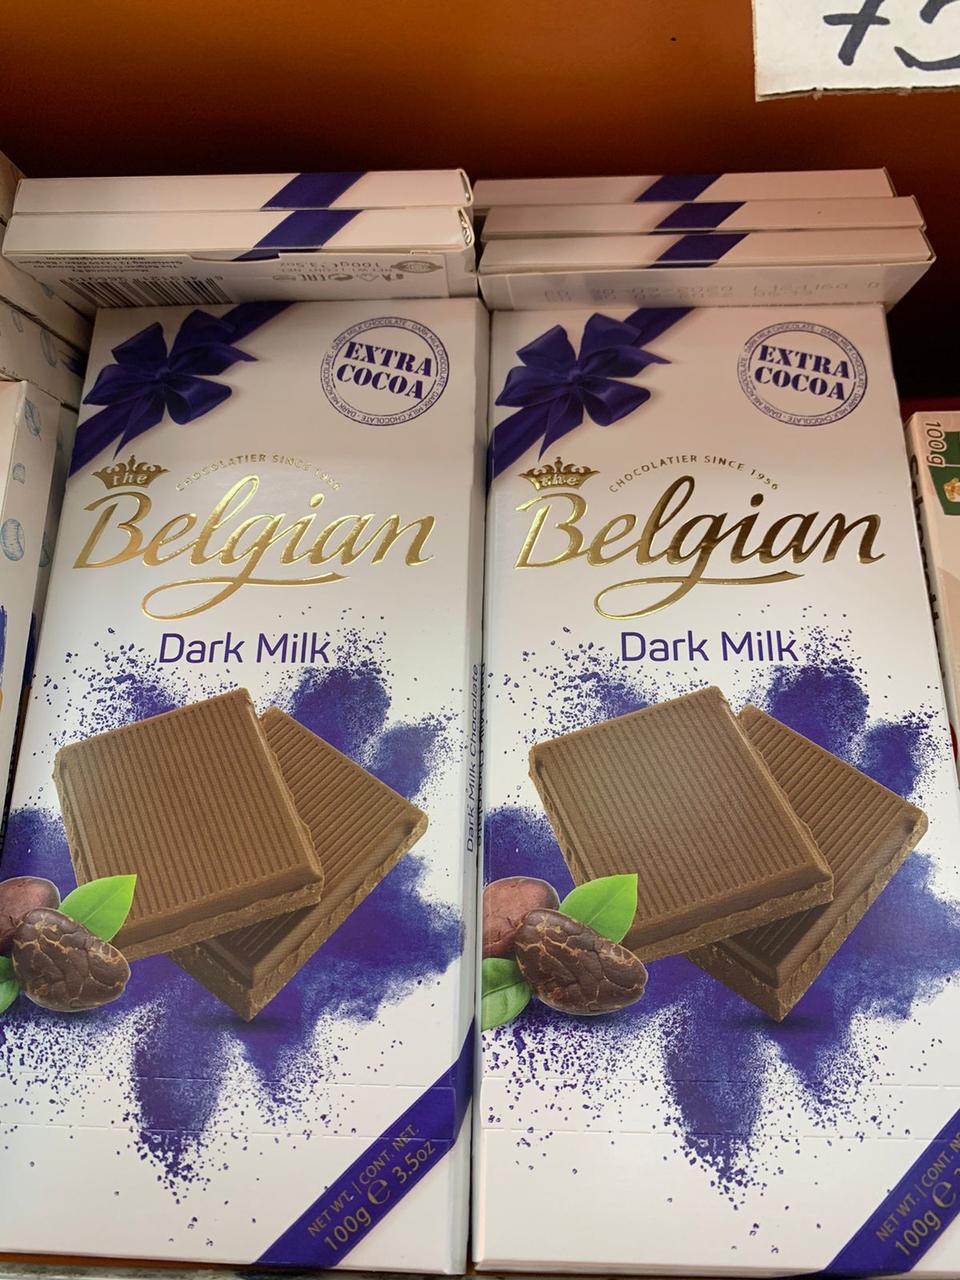 Плитка шоколада Belgian ТЕМНЫЙ ШОКОЛАД Darck Milk 100 гр.